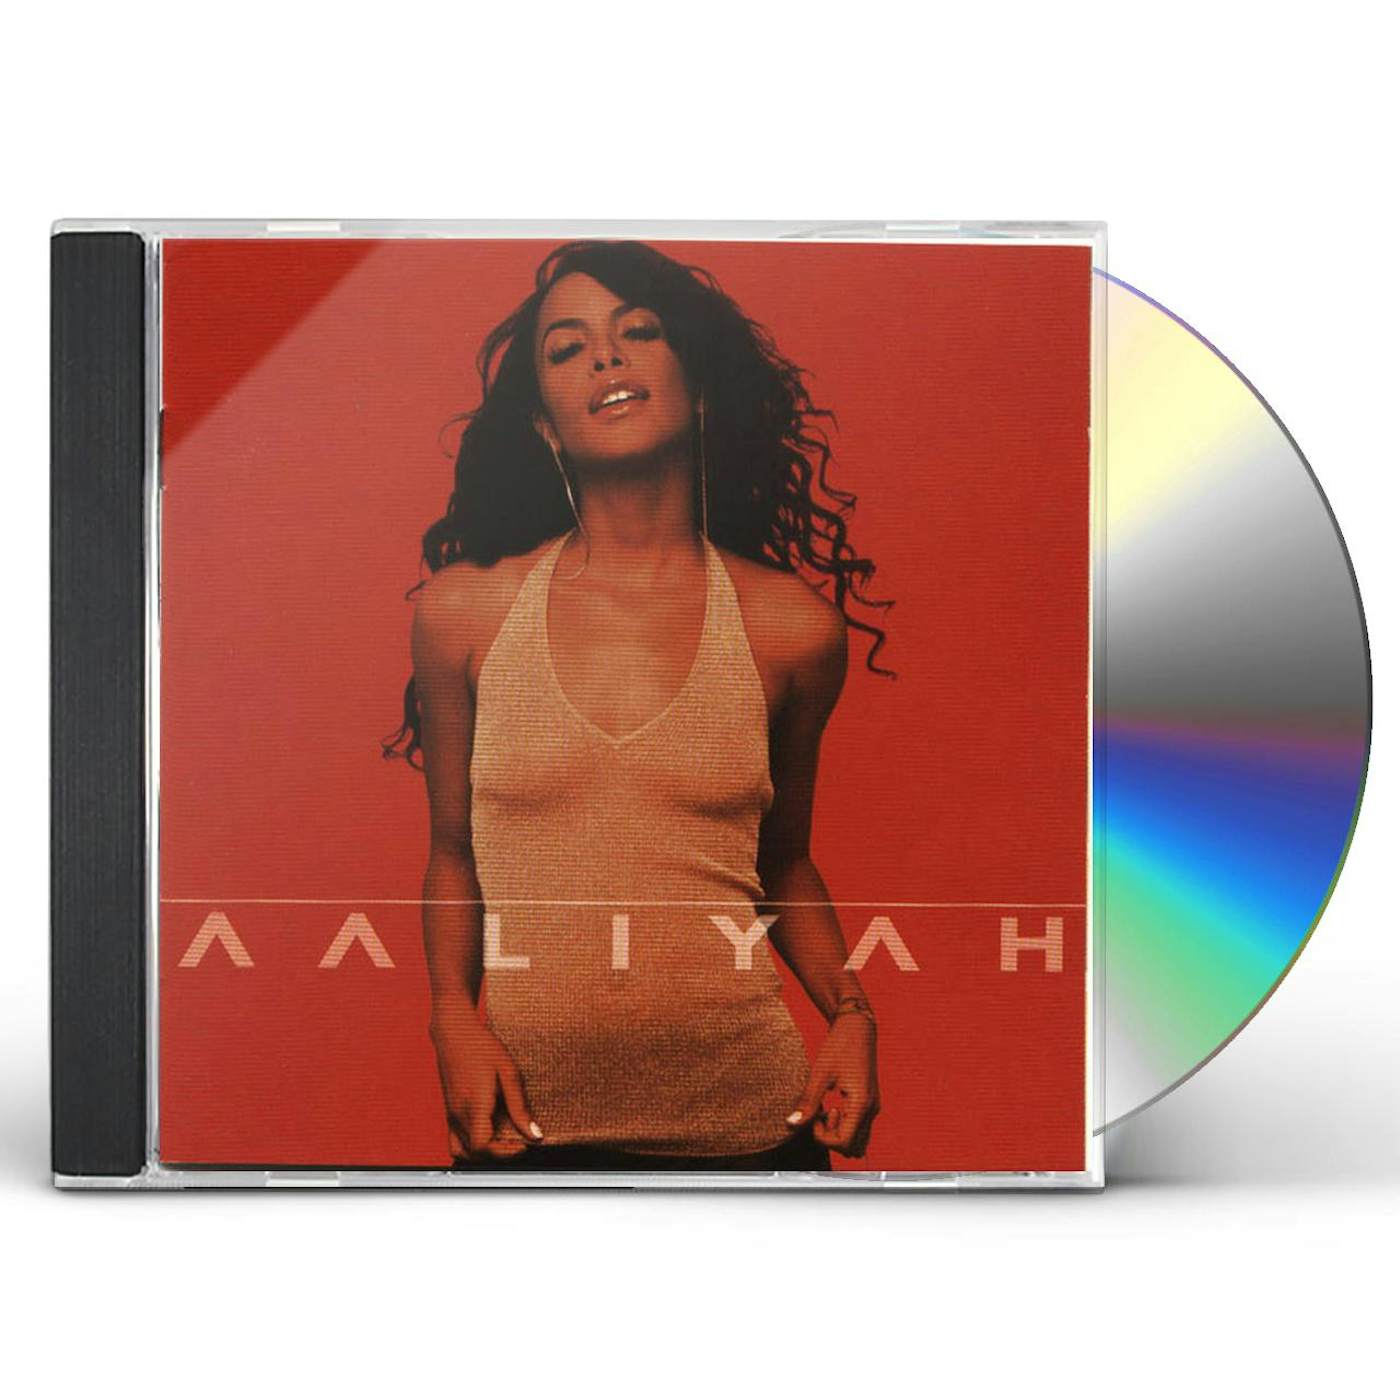 AALIYAH CD